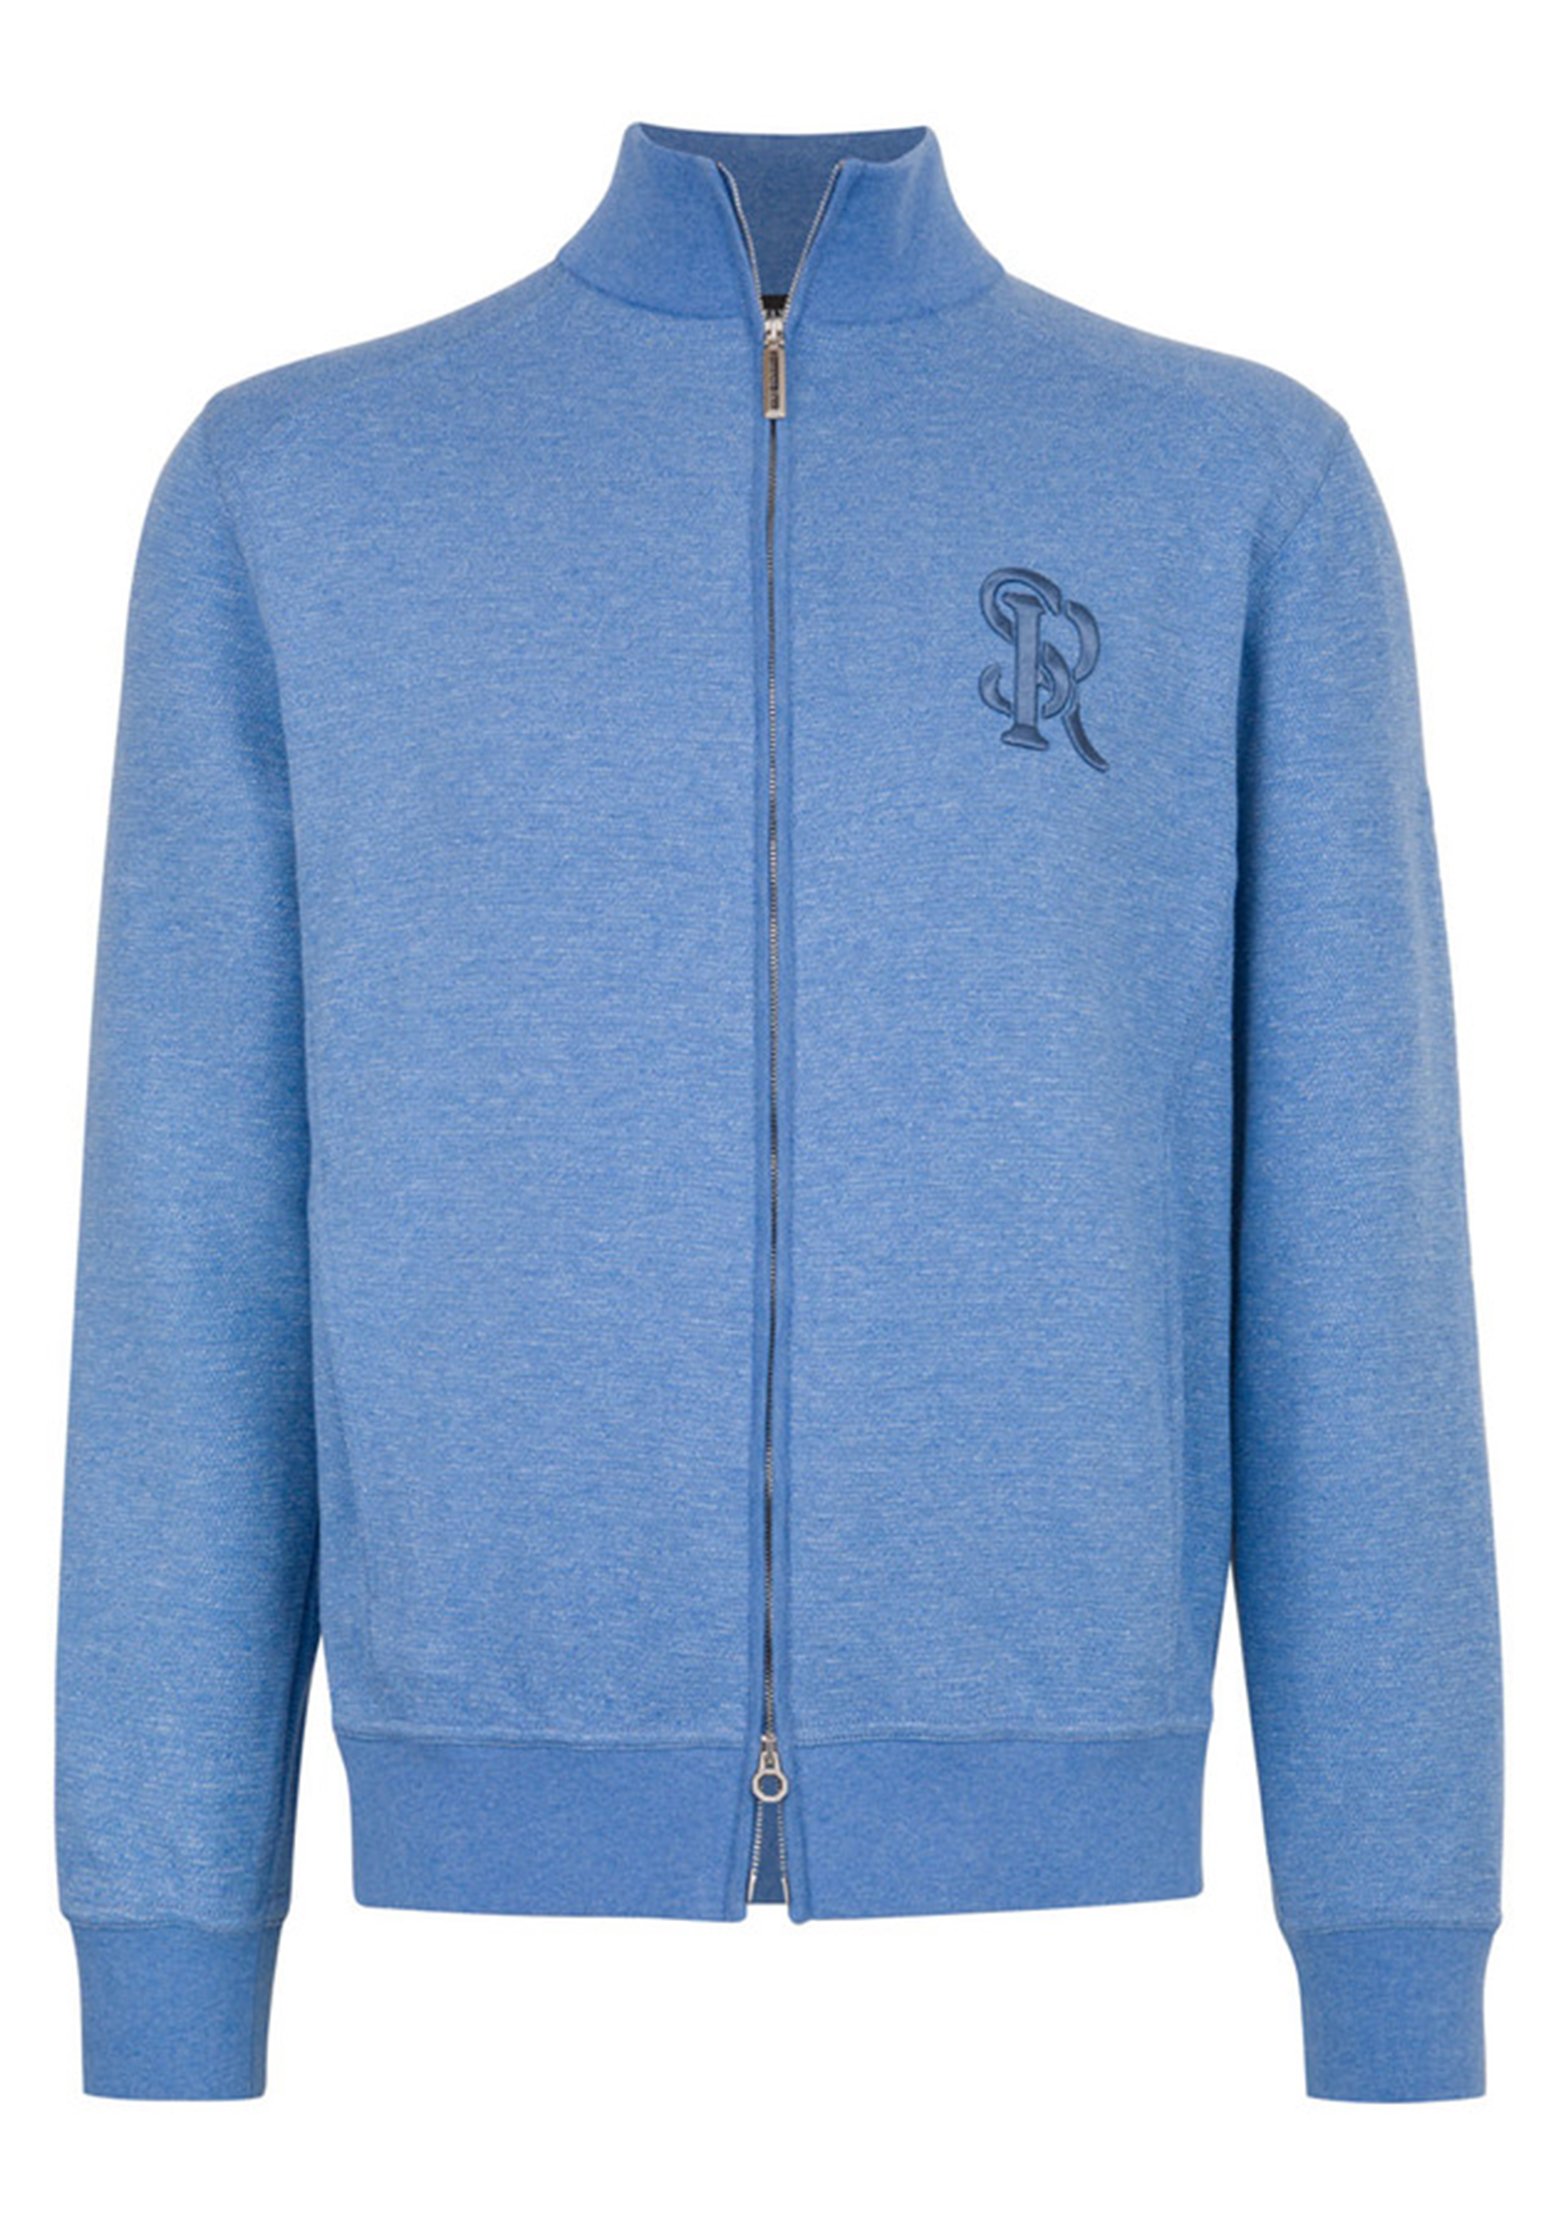 Sweatshirt STEFANO RICCI Color: blue (Code: 650) in online store Allure